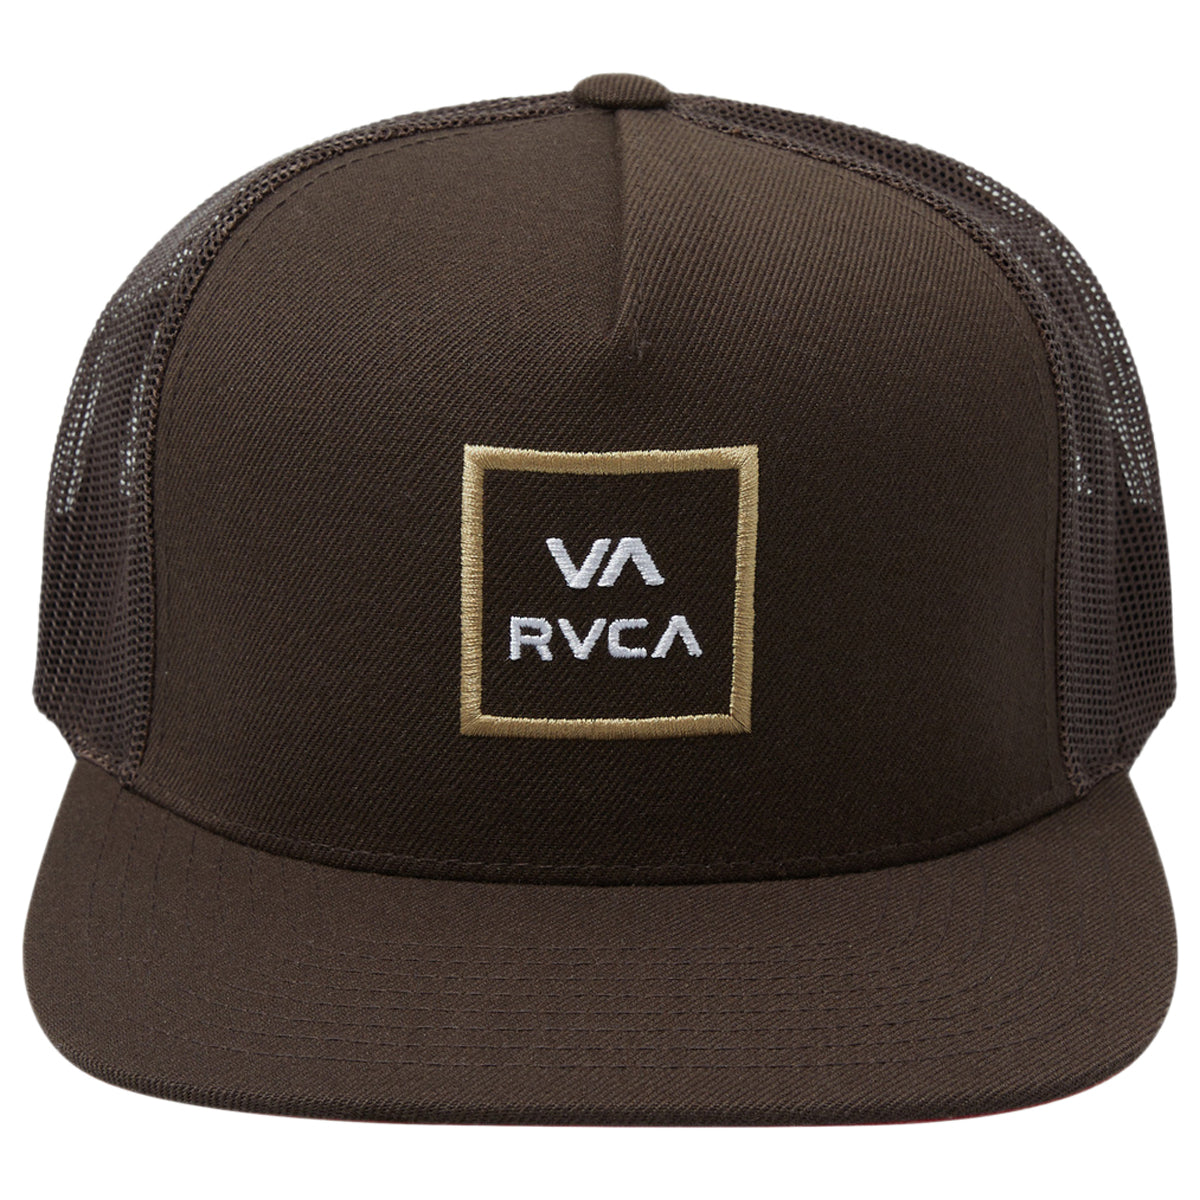 RVCA Va All The Way Trucker Hat - Chocolate image 3